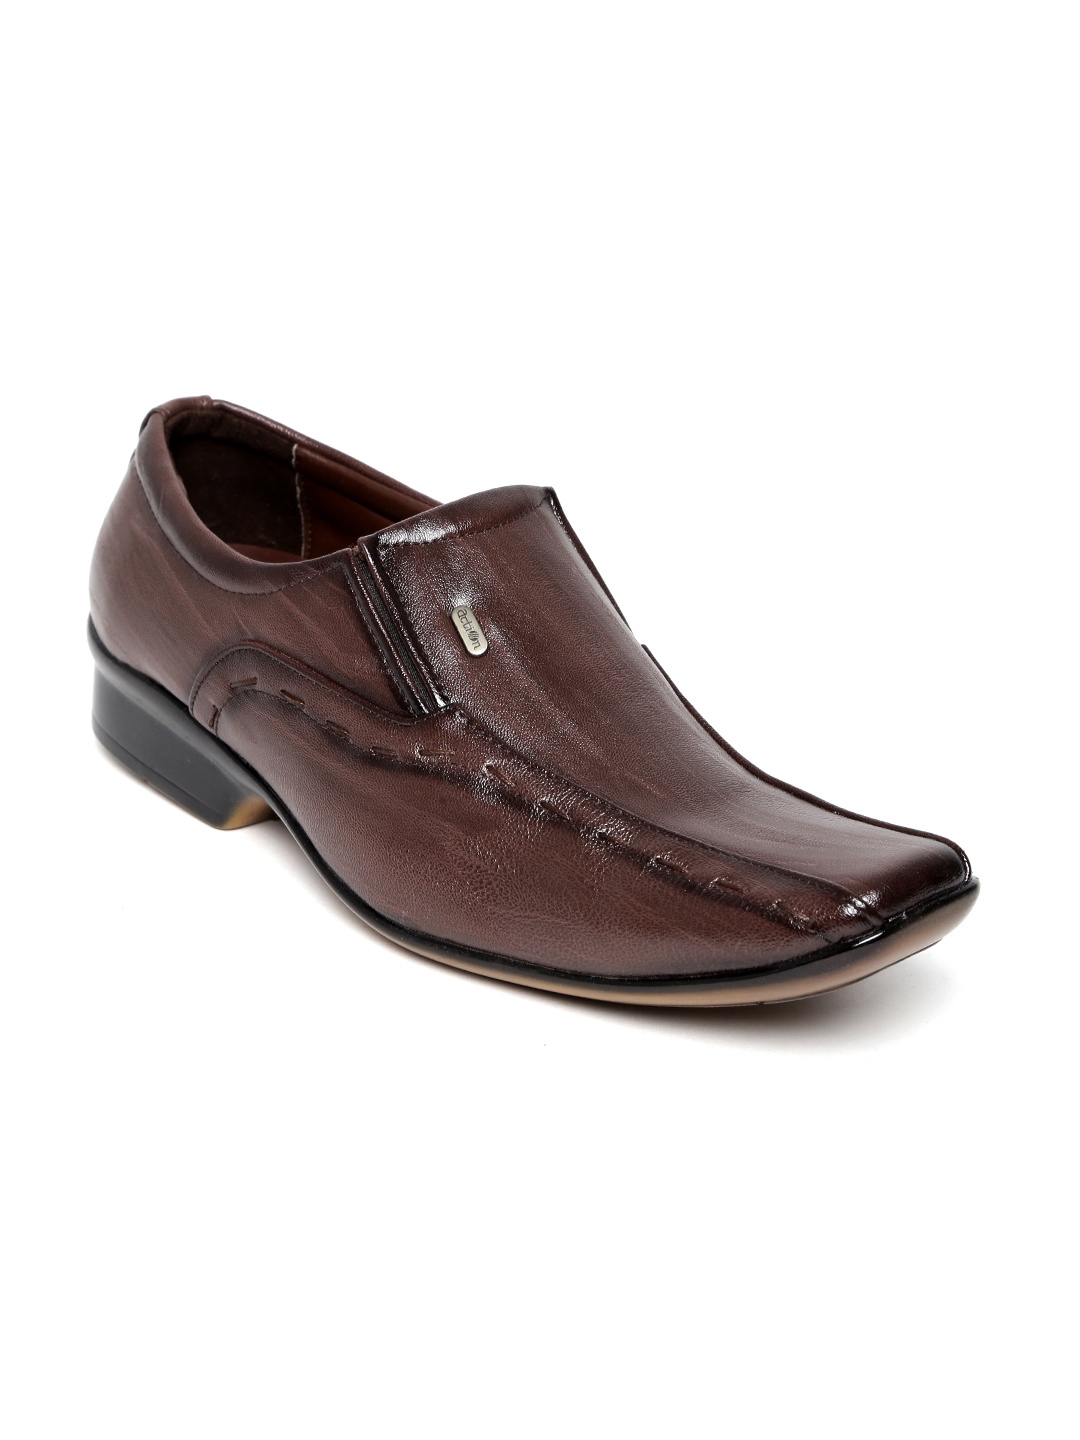 Buy Action Men Brown Formal Shoes - Formal Shoes for Men 581816 | Myntra